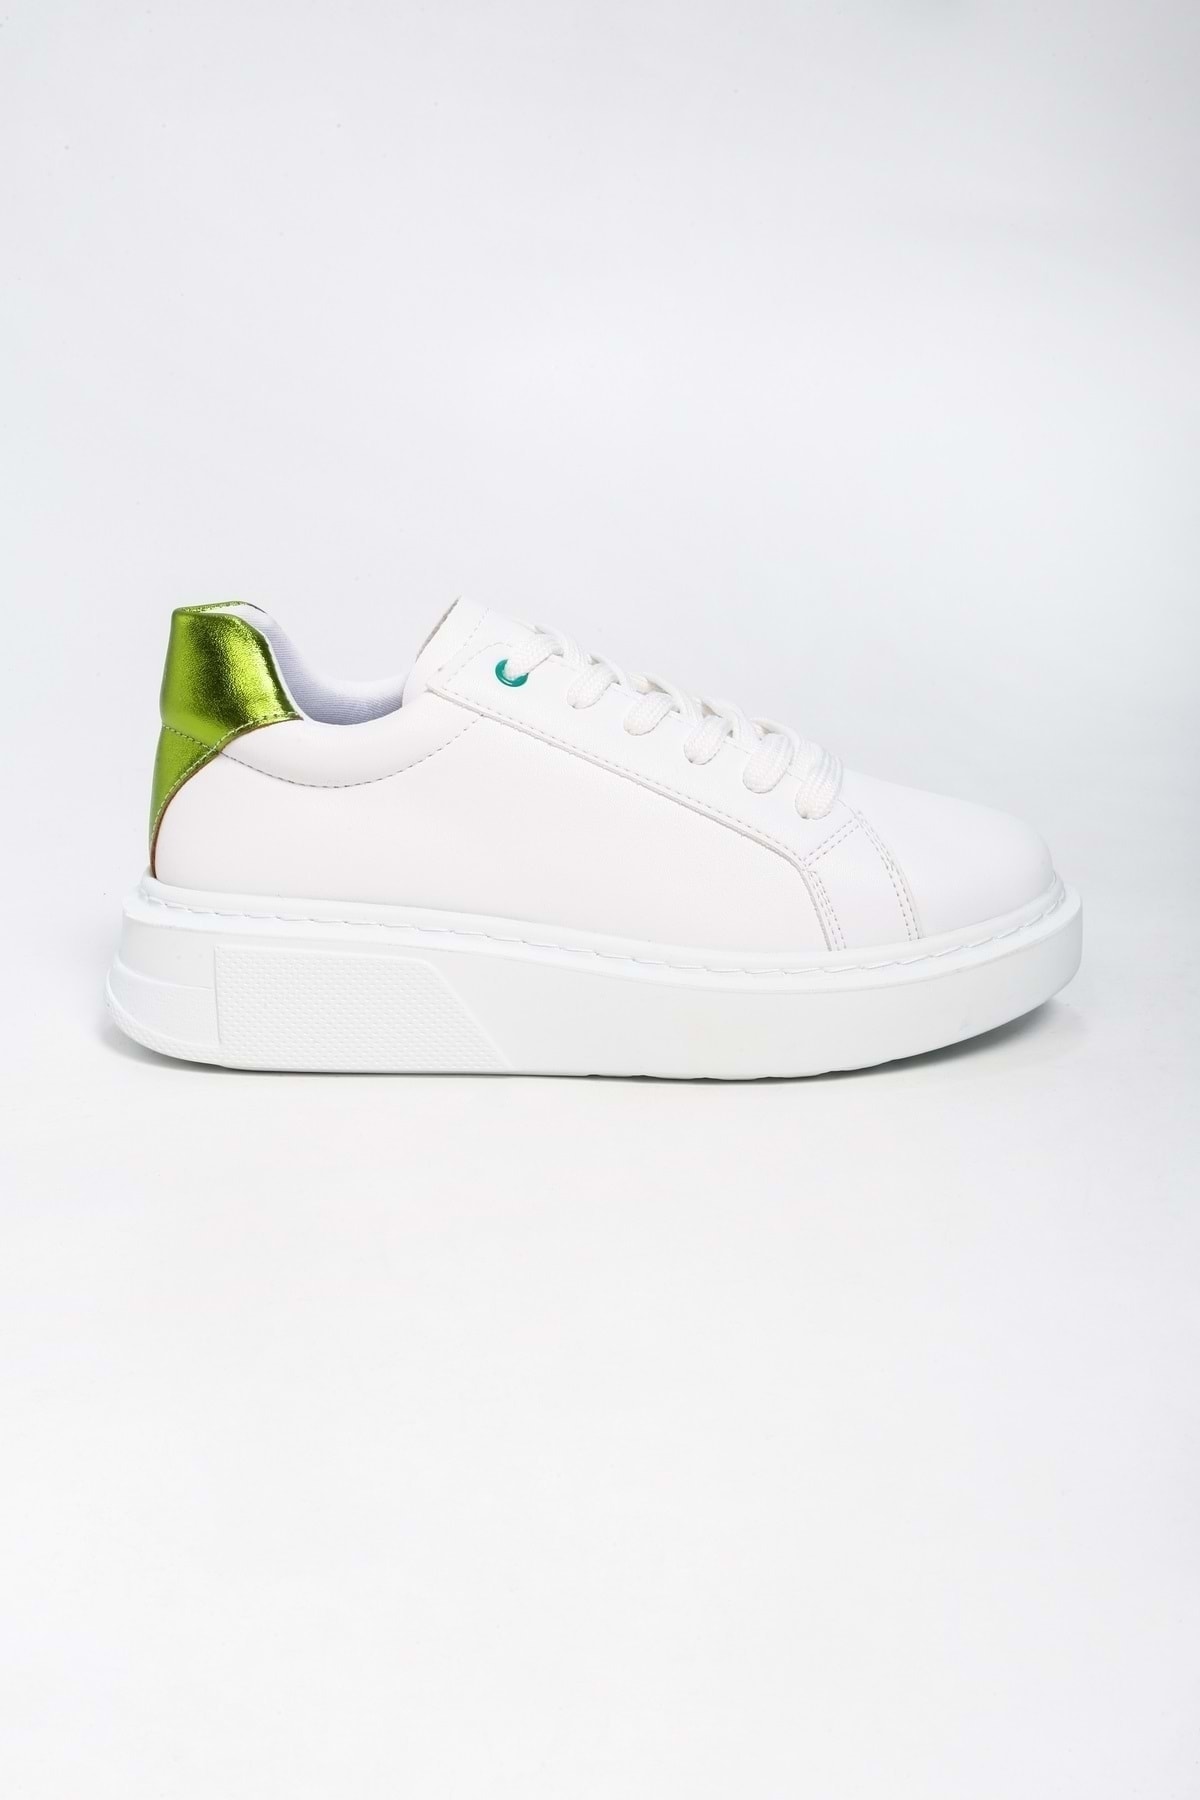 Shoeberry Women's Vixon White Green Sneaker Sports Casual Shoes.